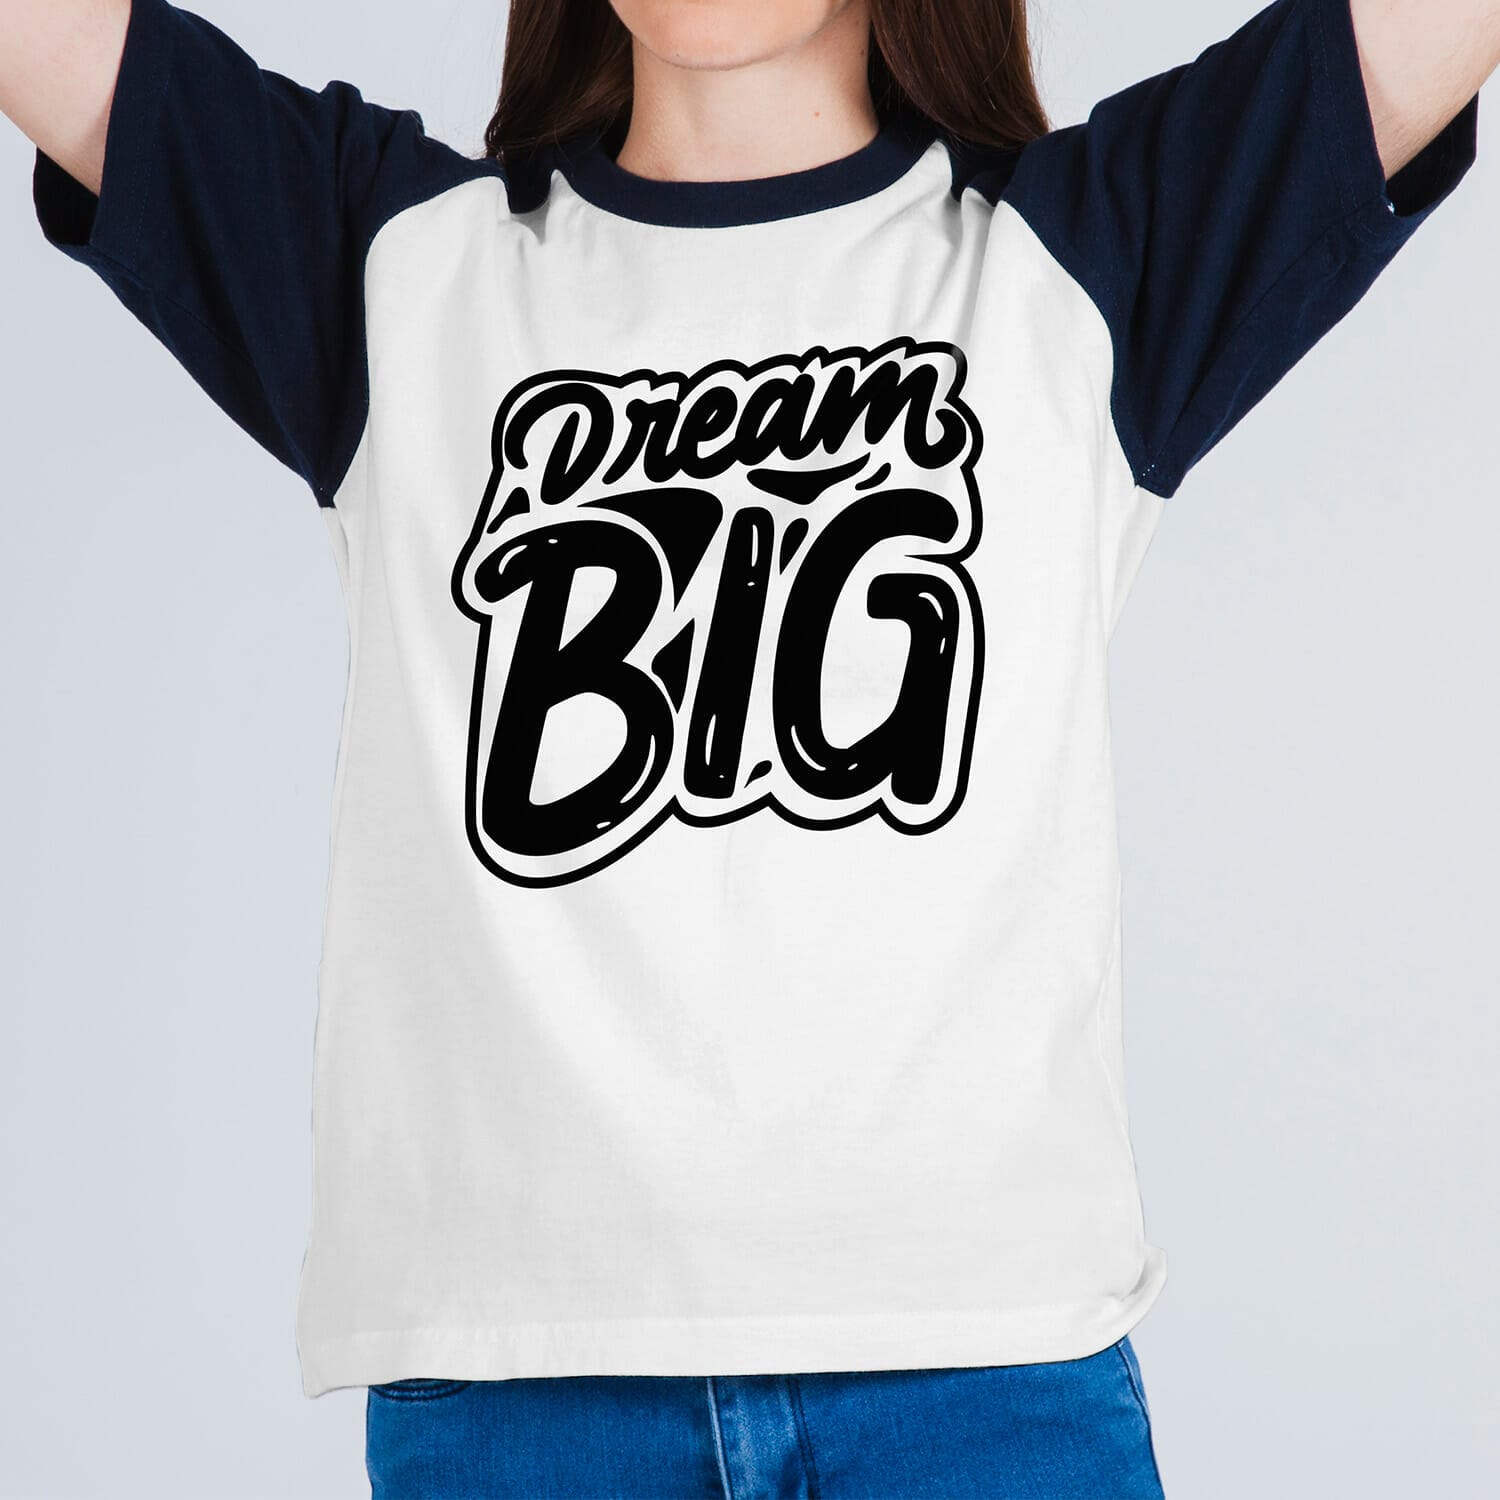 Dream big T shirt design For Inspiration and Motivation